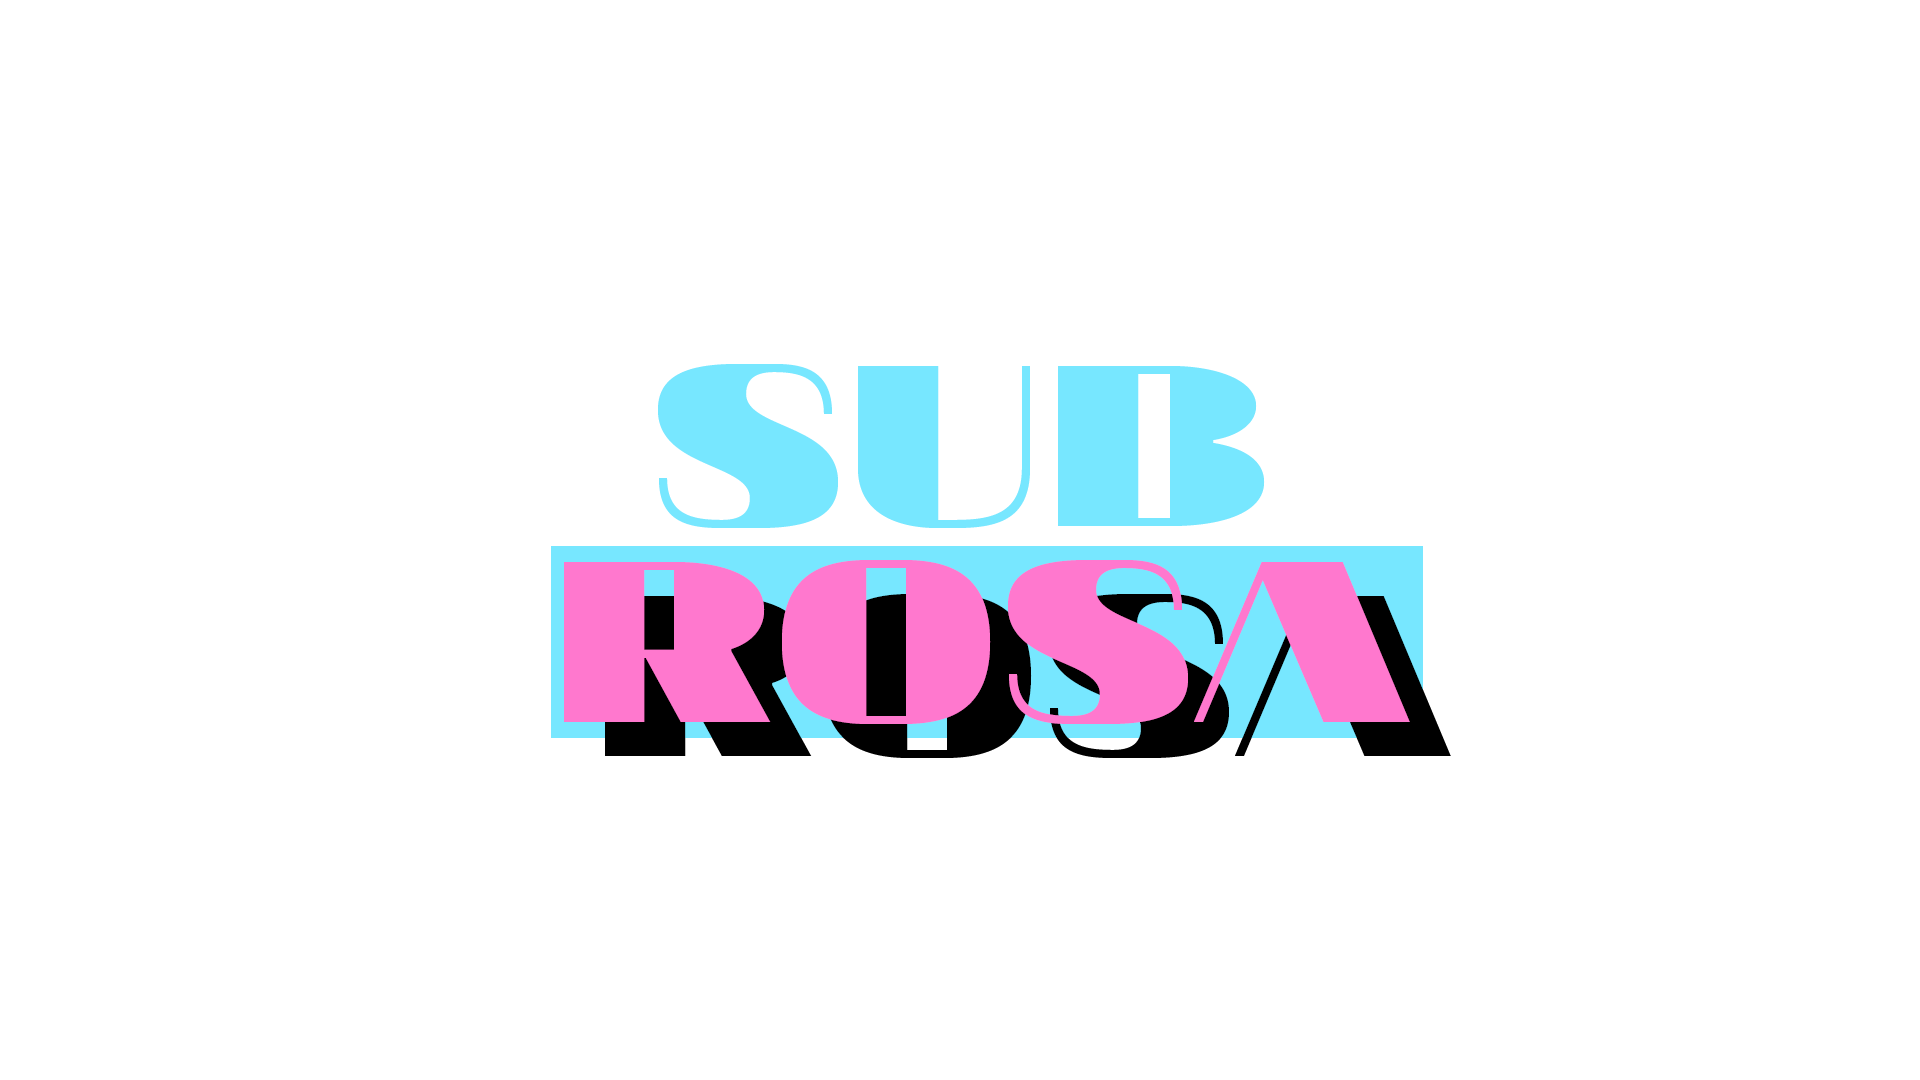 Subrosa Logo - Miami Vice/Sub Rosa logo : subrosa